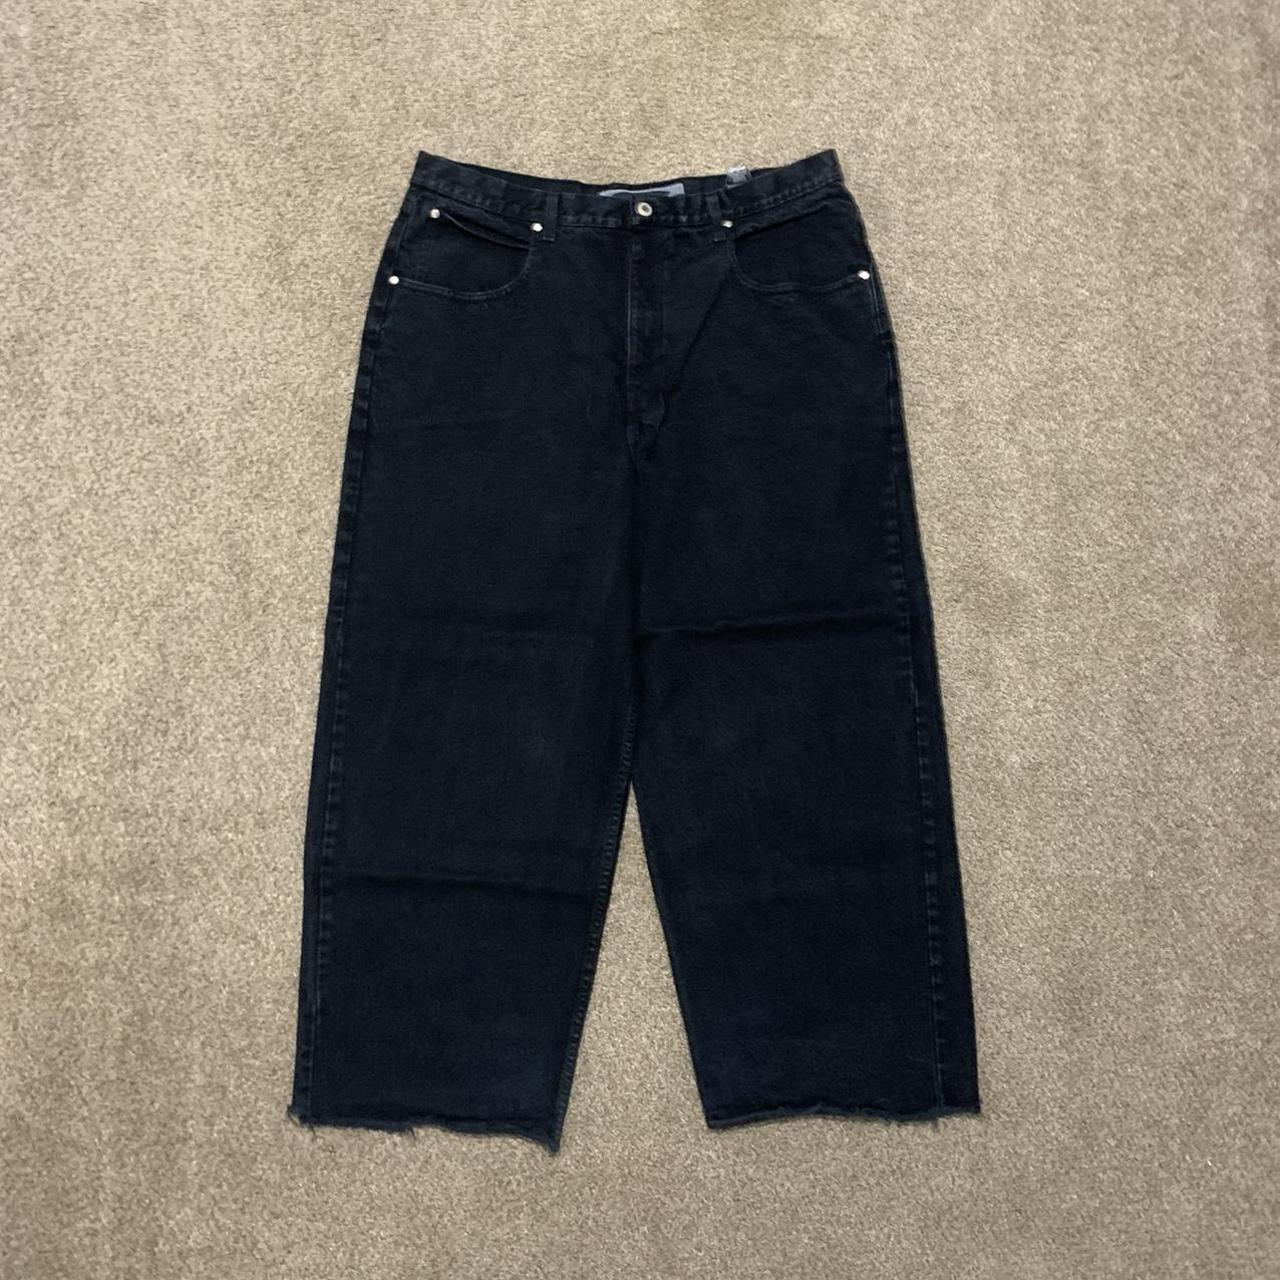 beyond baggy anchor blue jeans 42x27 - Depop